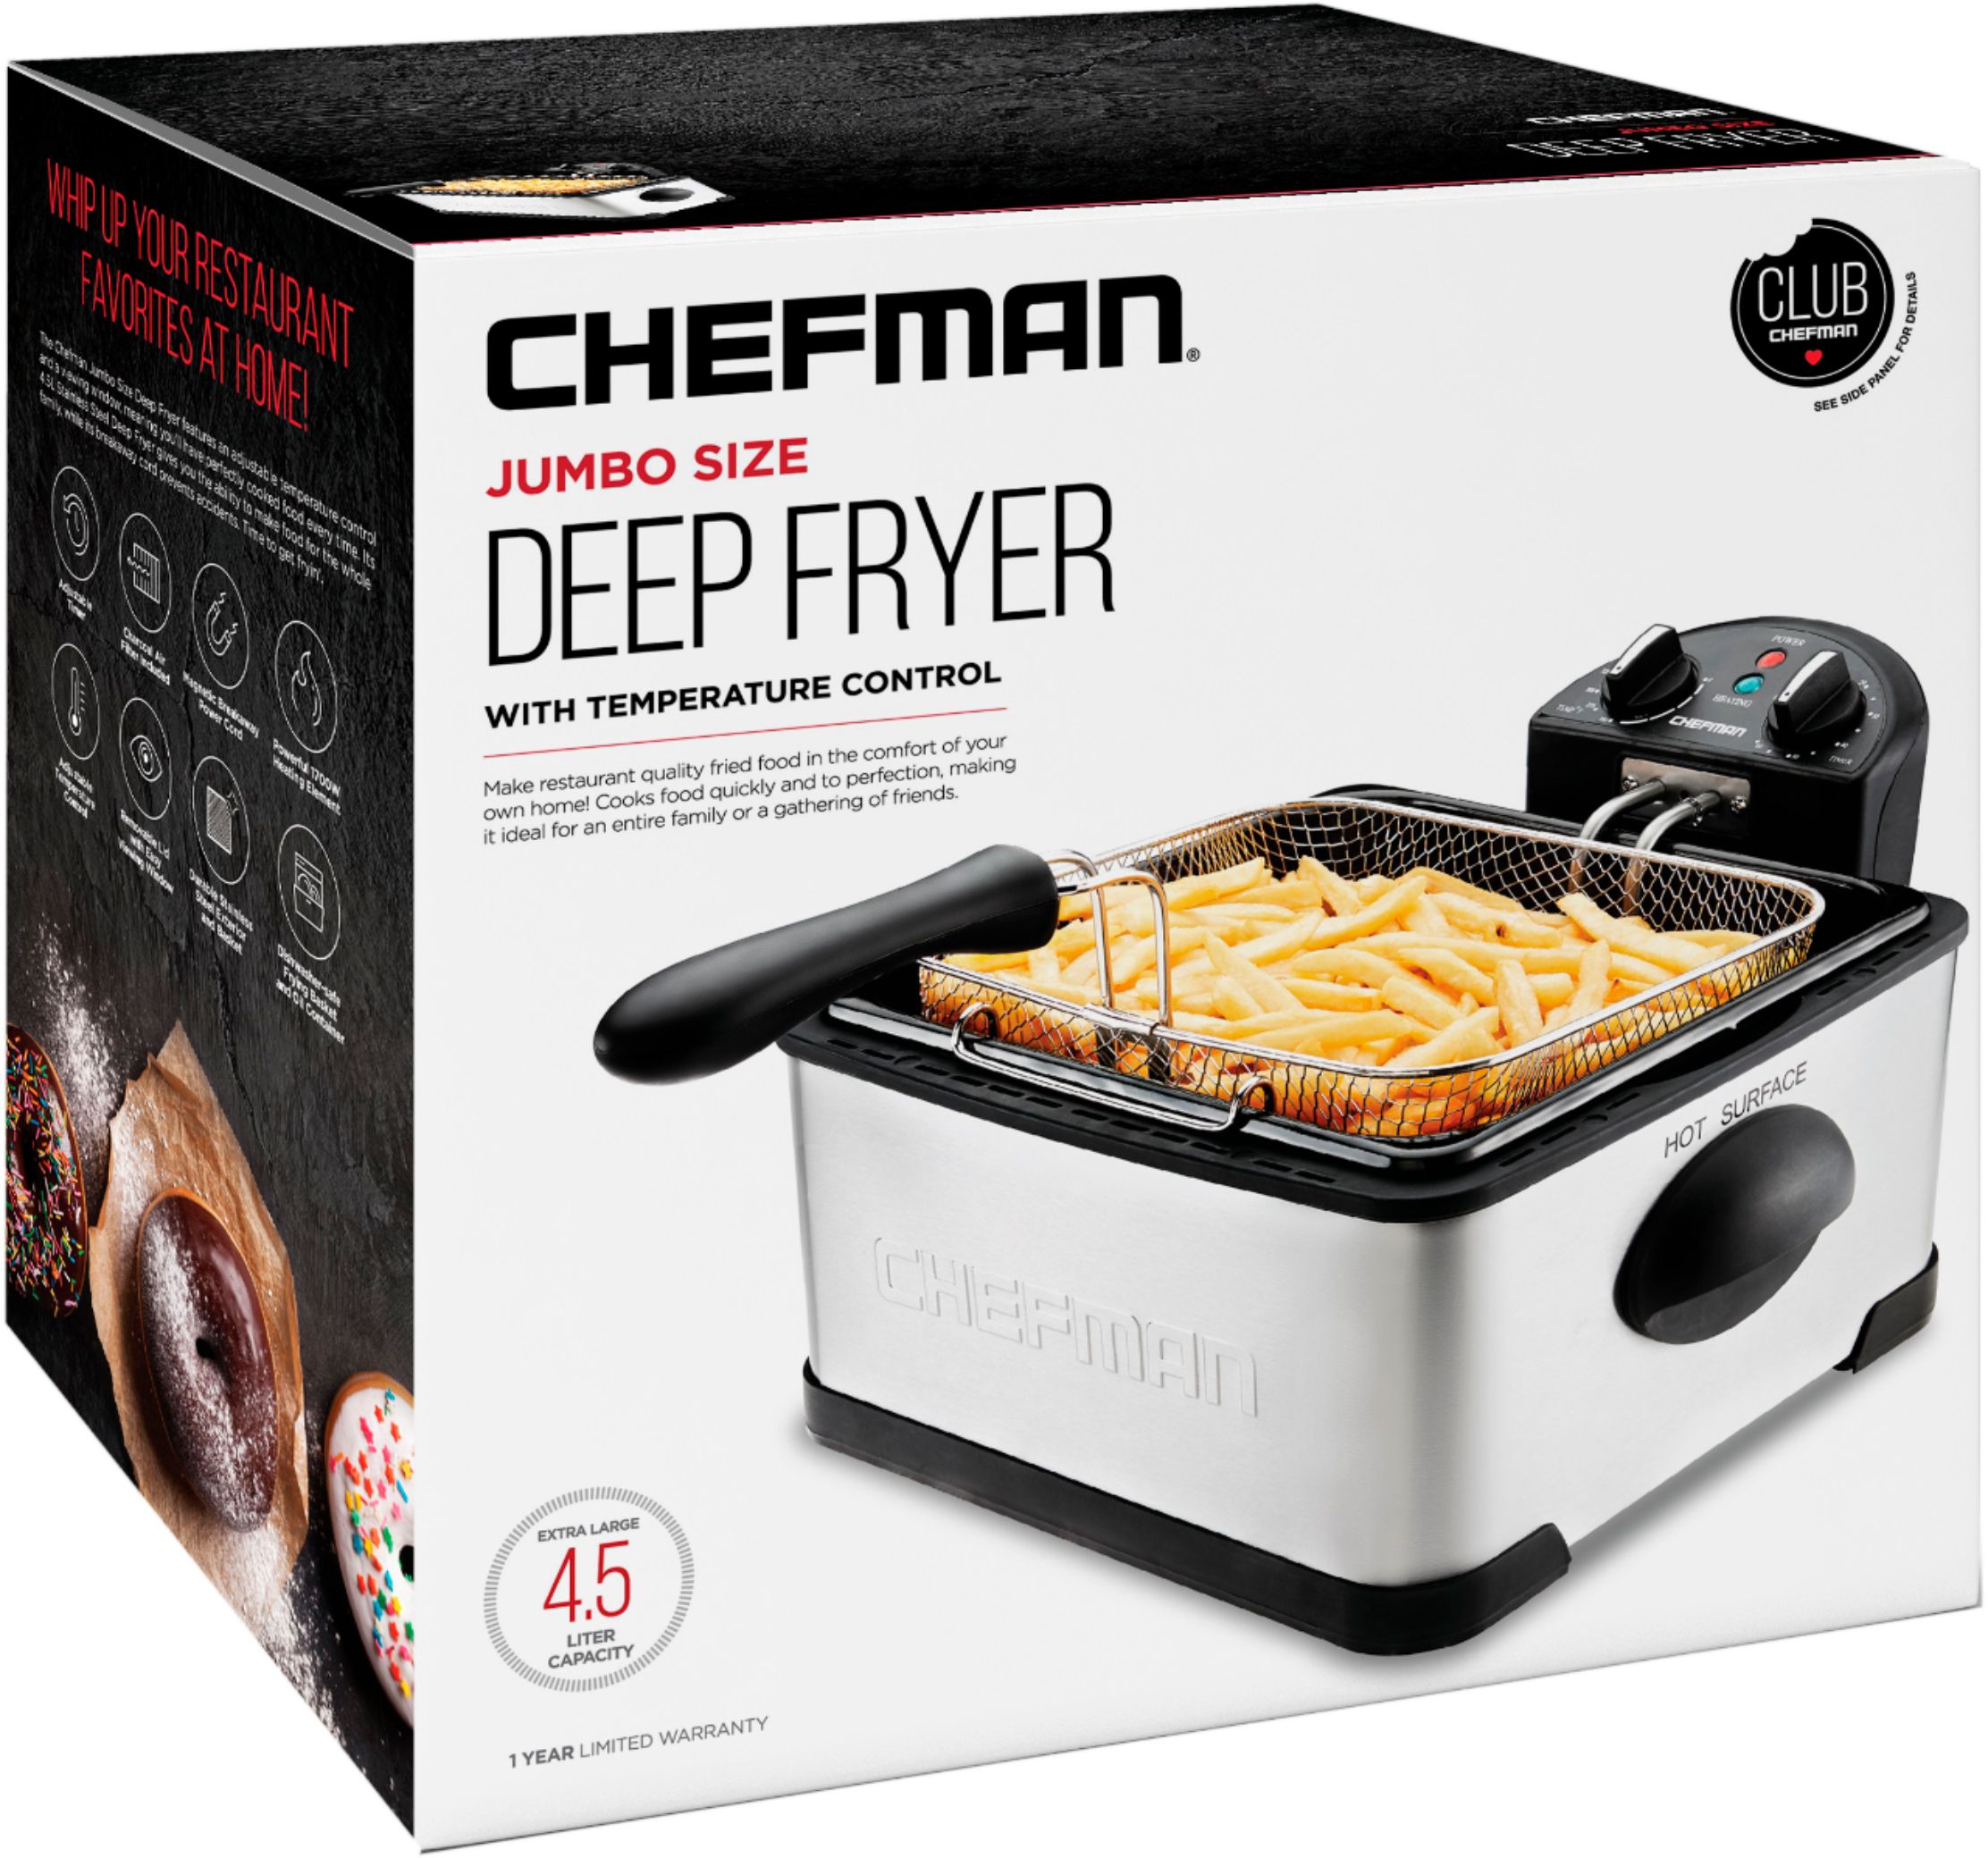 Chefman Jumbo Size Deep Fryer Stainless Steel 17 Cup